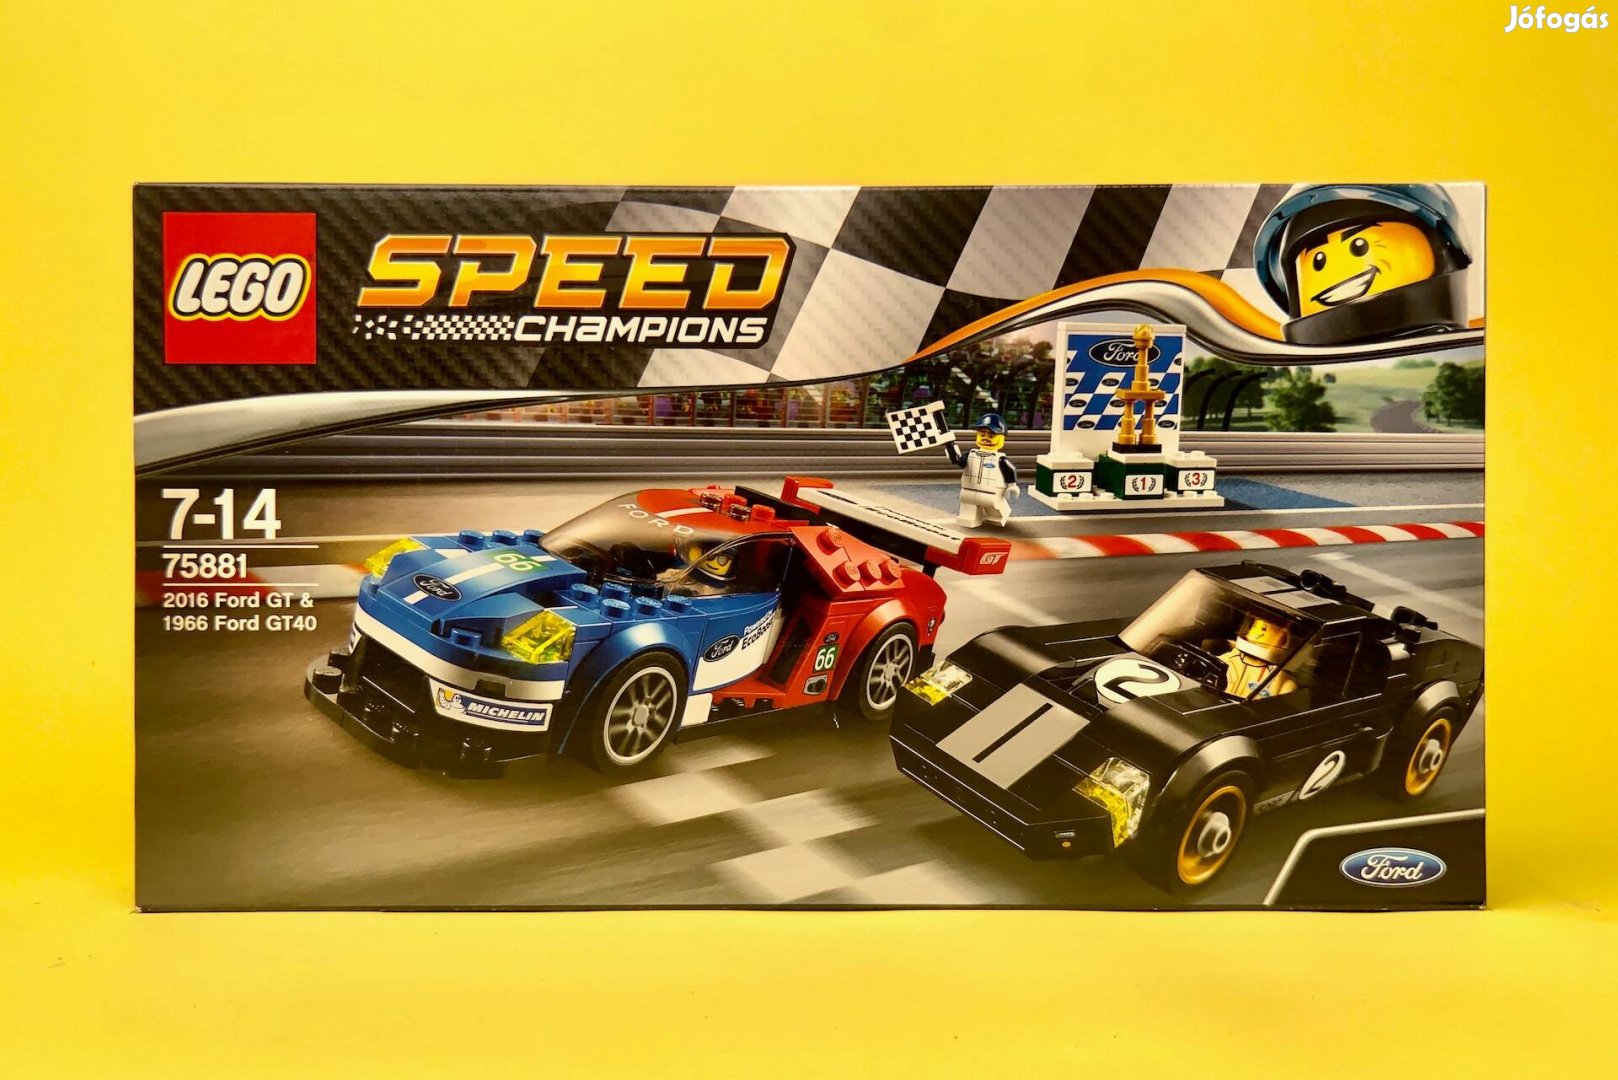 LEGO Speed Champions 75881 2016 Ford GT és 1966 Ford GT40 Uj Bontatlan